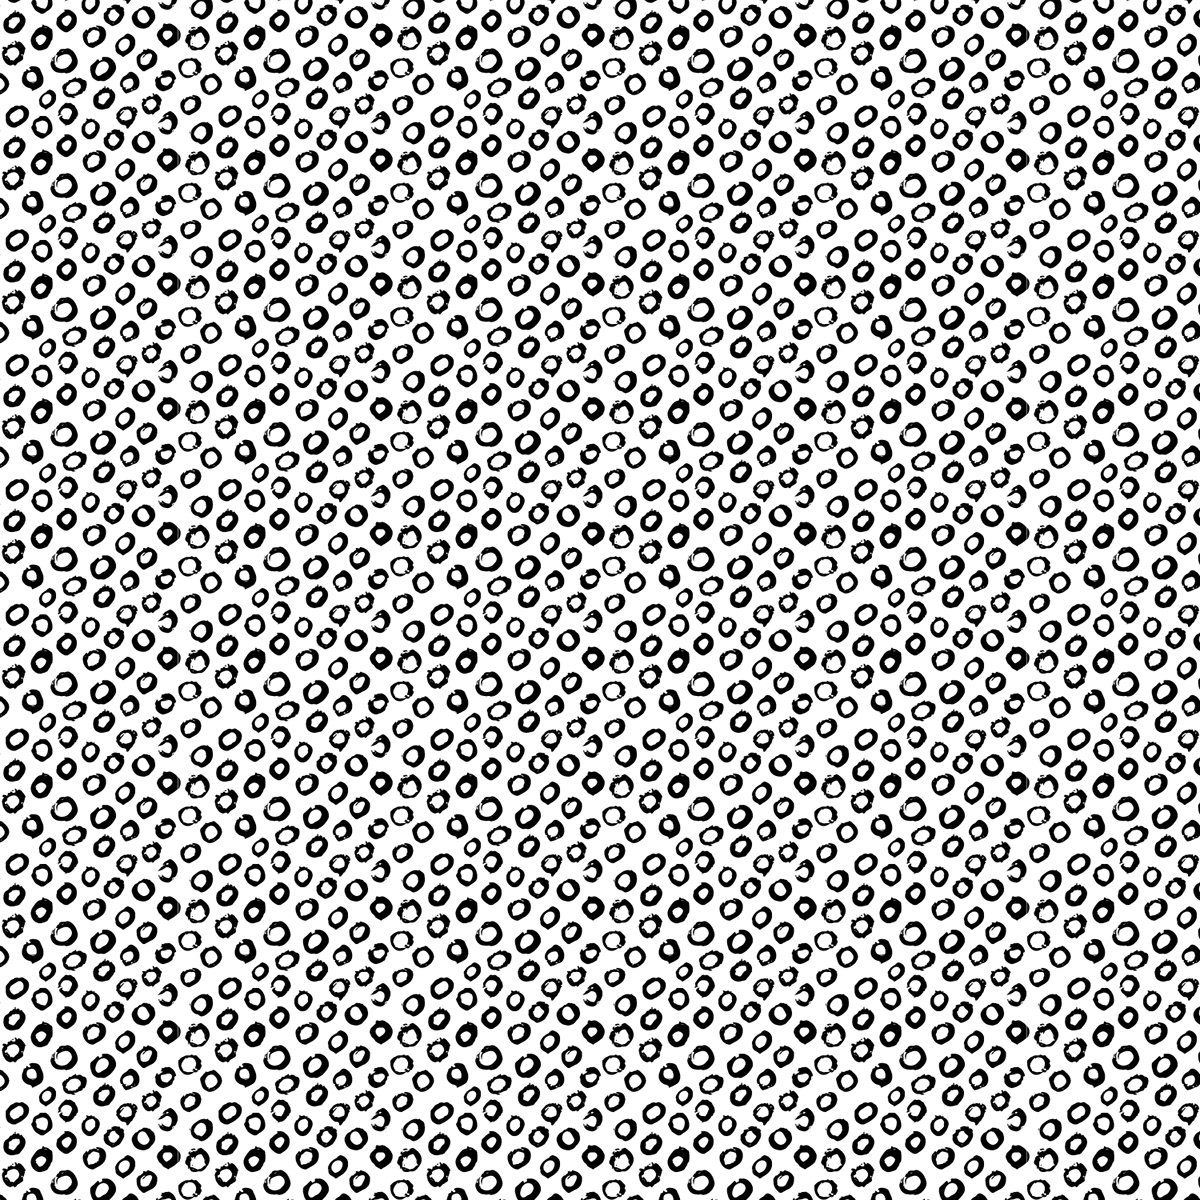 pattern texture